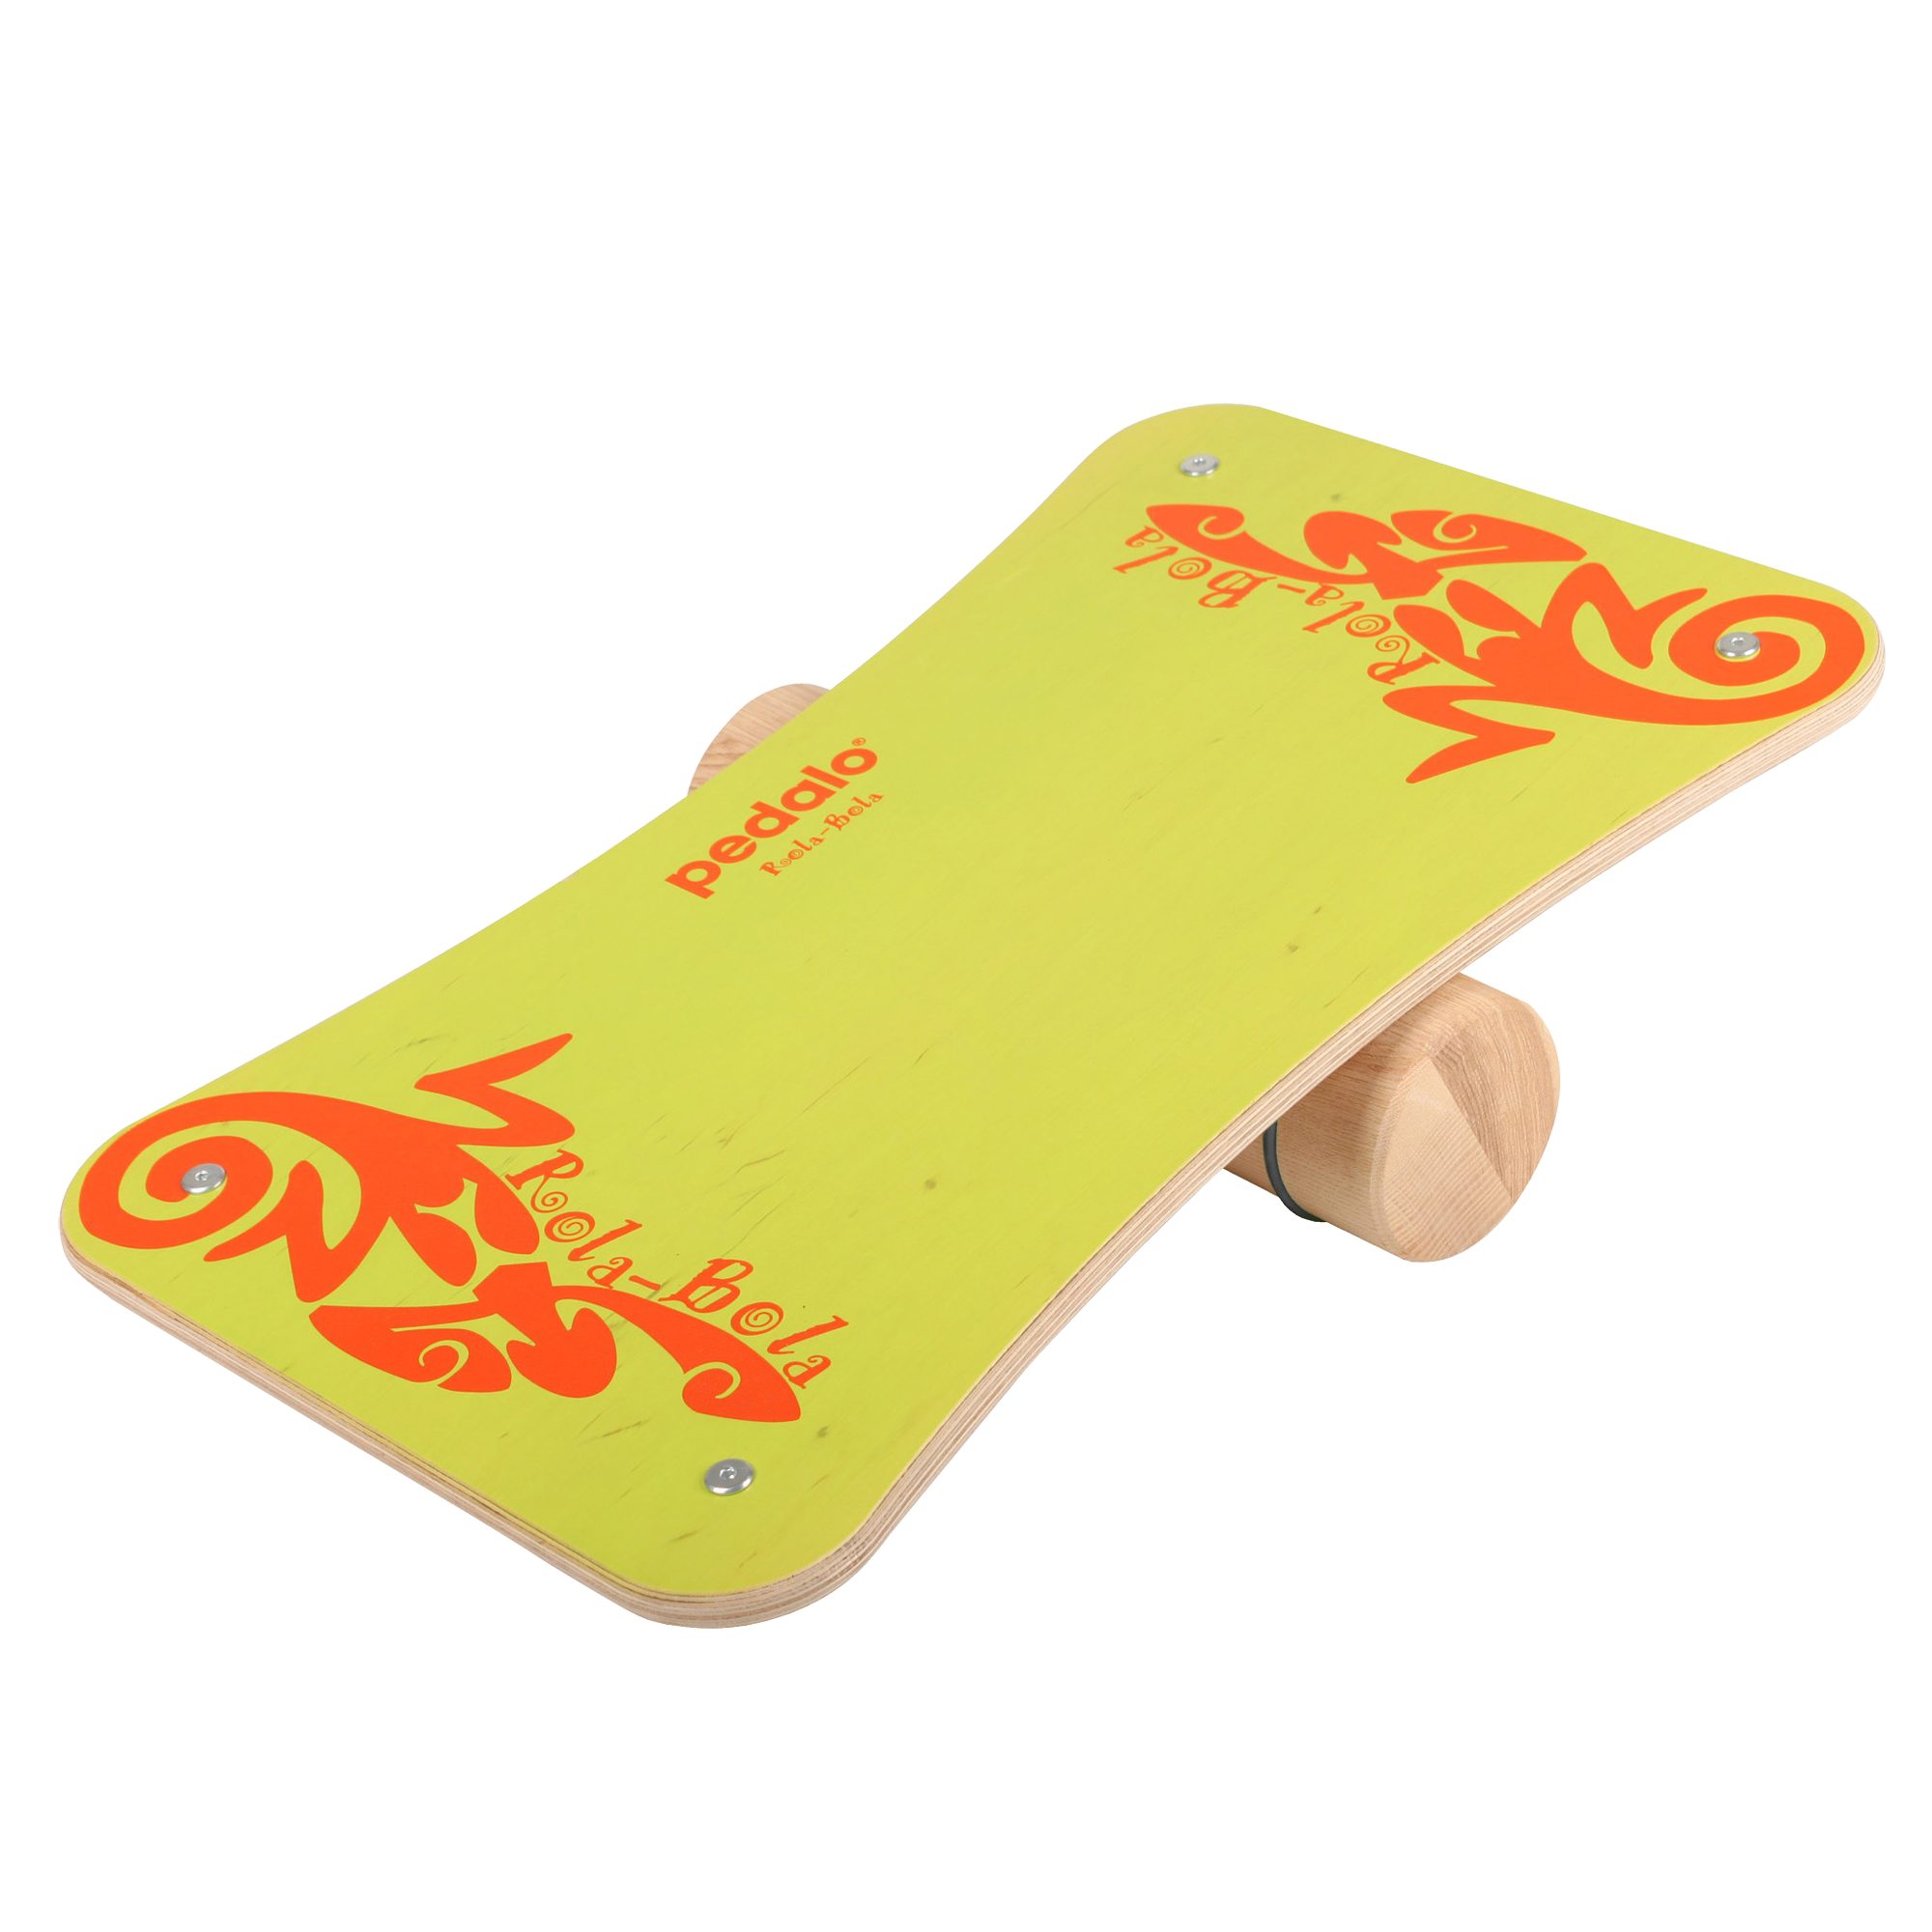 Balanceboard, Reflextrainer pedalo® Rola-Bola Balanceboard Pedalo grün Gleichgewichtstrainer,